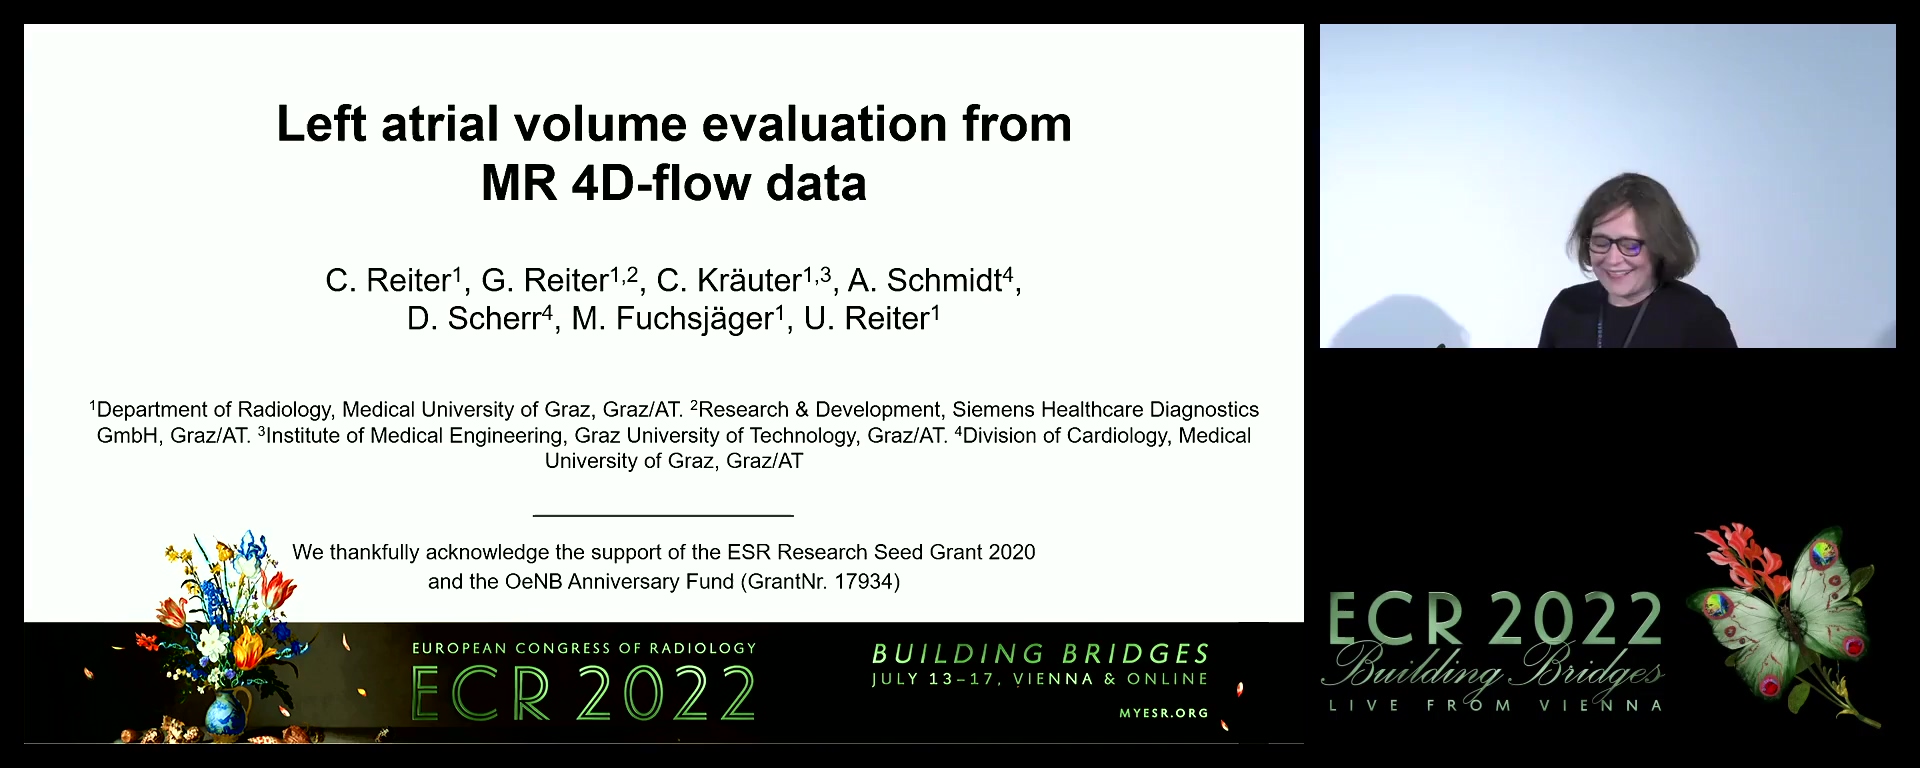 Left atrial volume evaluation from MR 4D-flow data - Ursula Reiter, Graz / AT